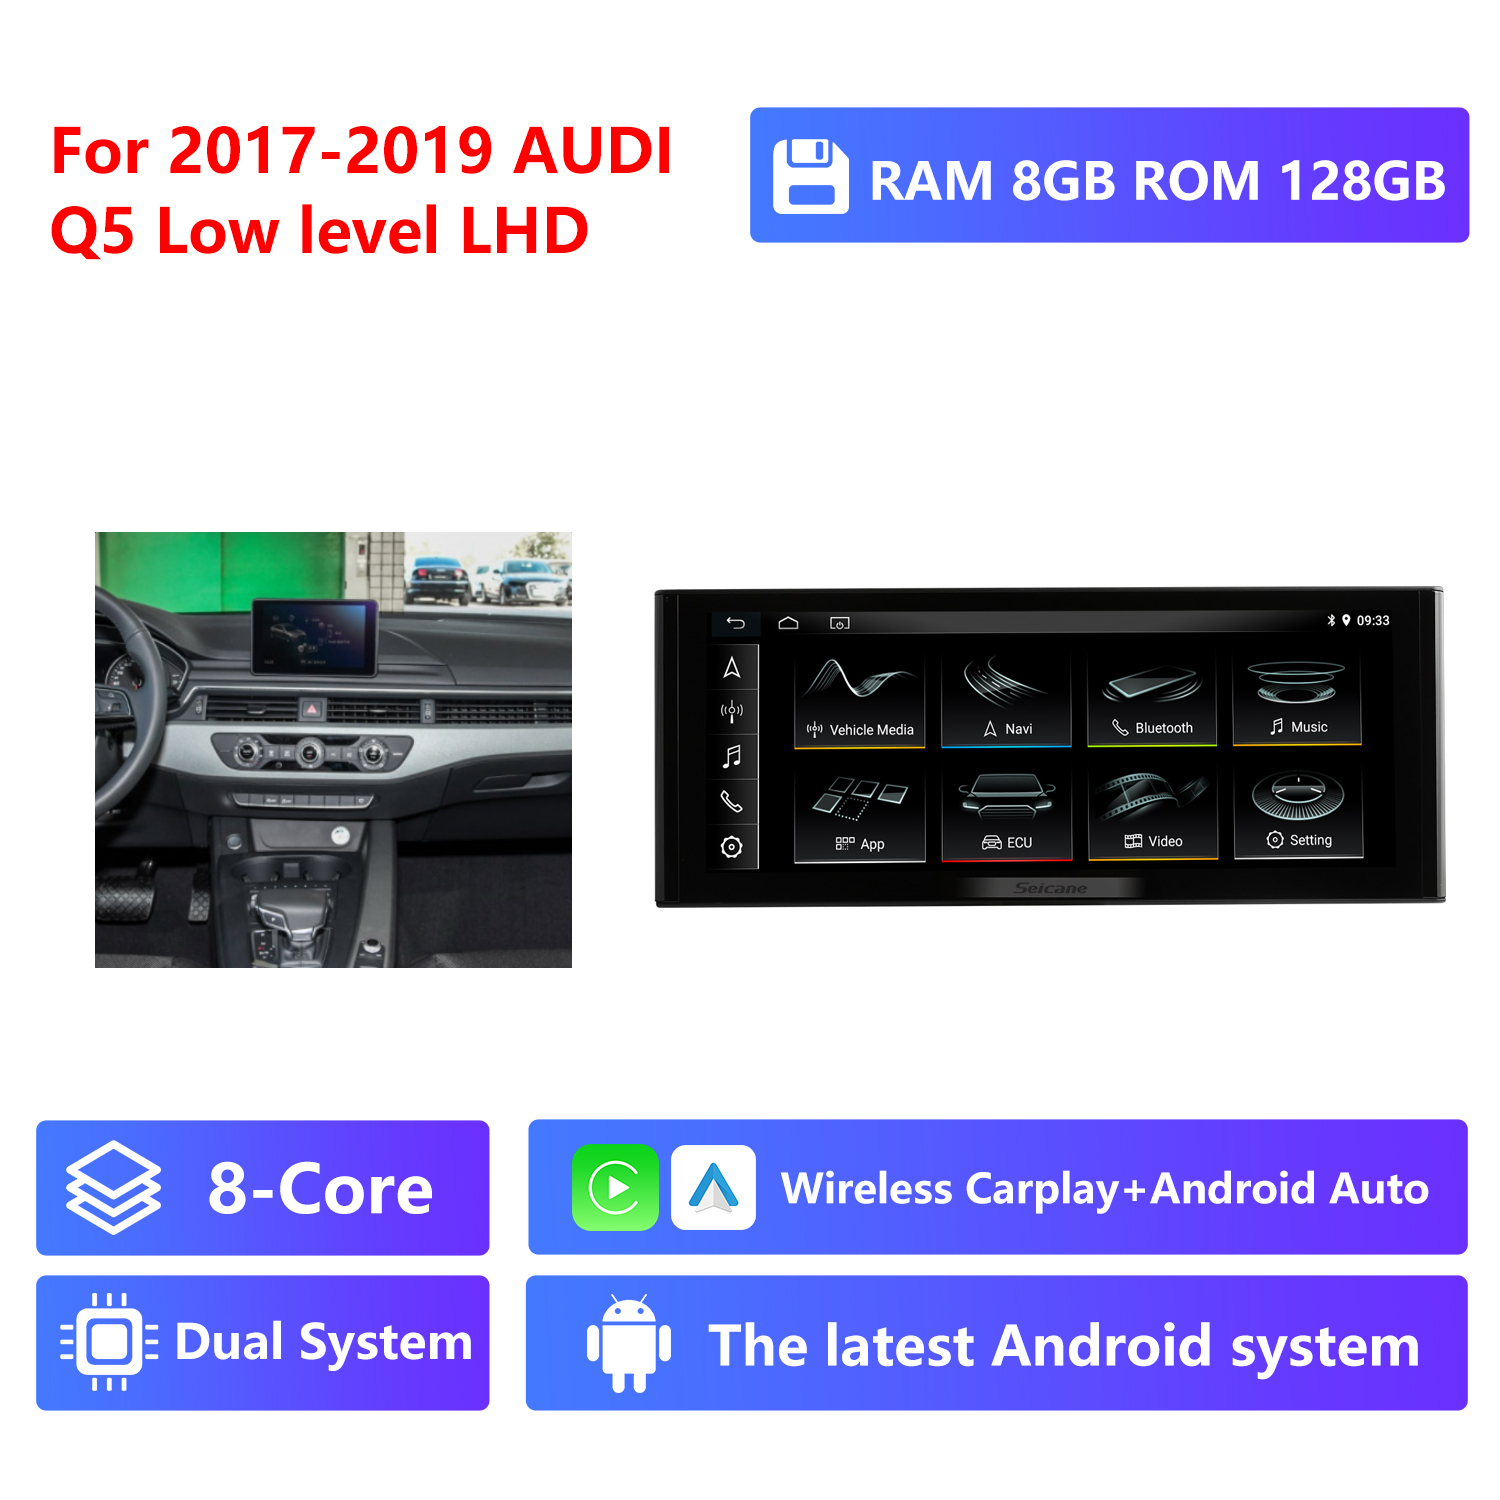 8-Core RAM 8G ROM 128G,2017-2019,Low version,LHD